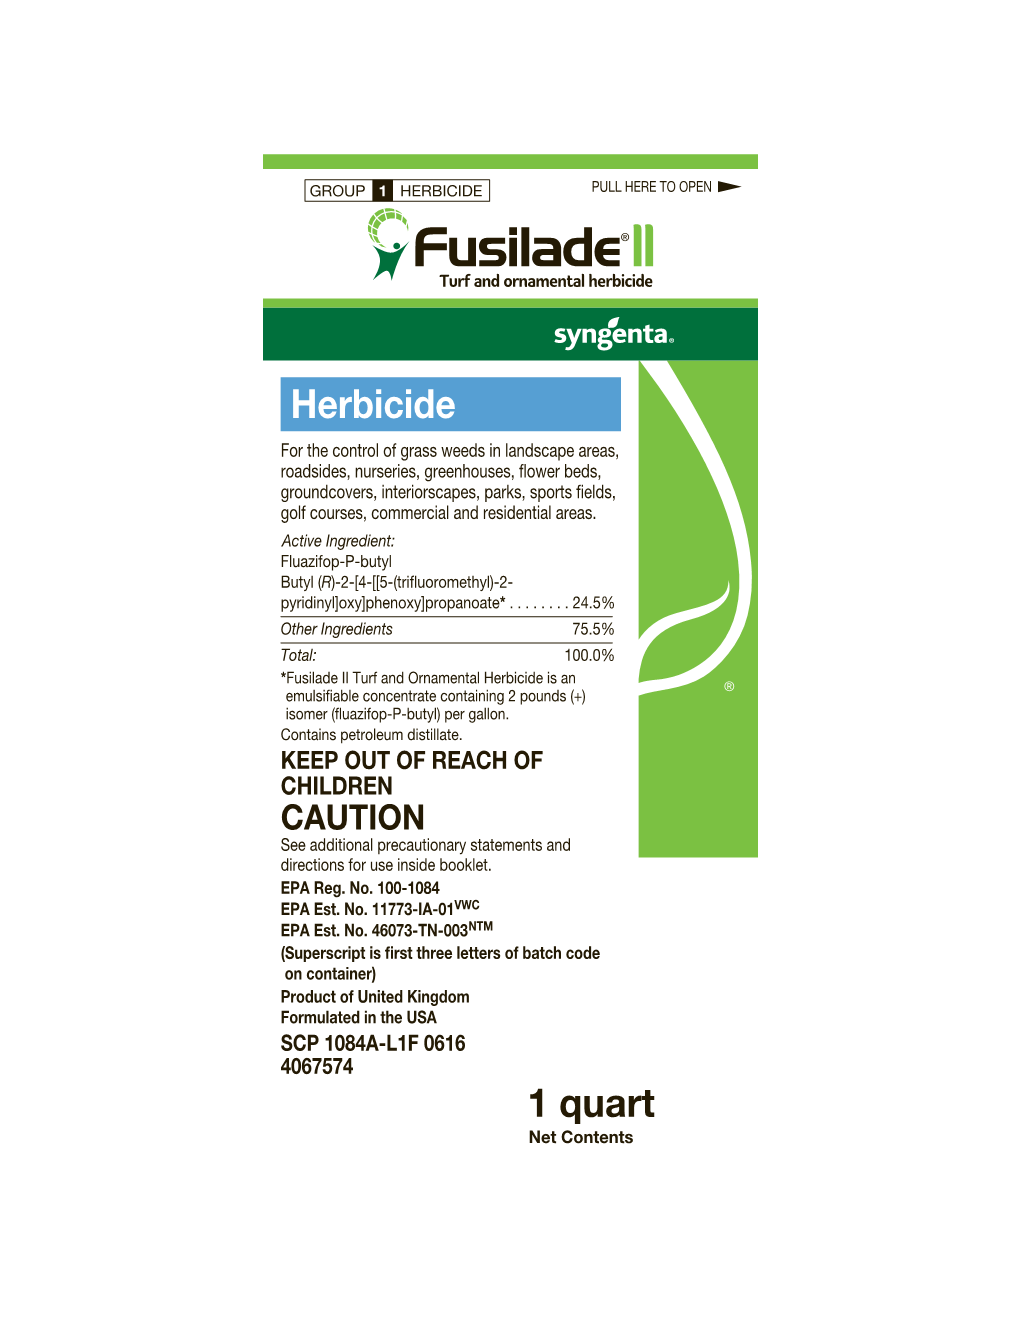 Fusilade II Herbicide Label